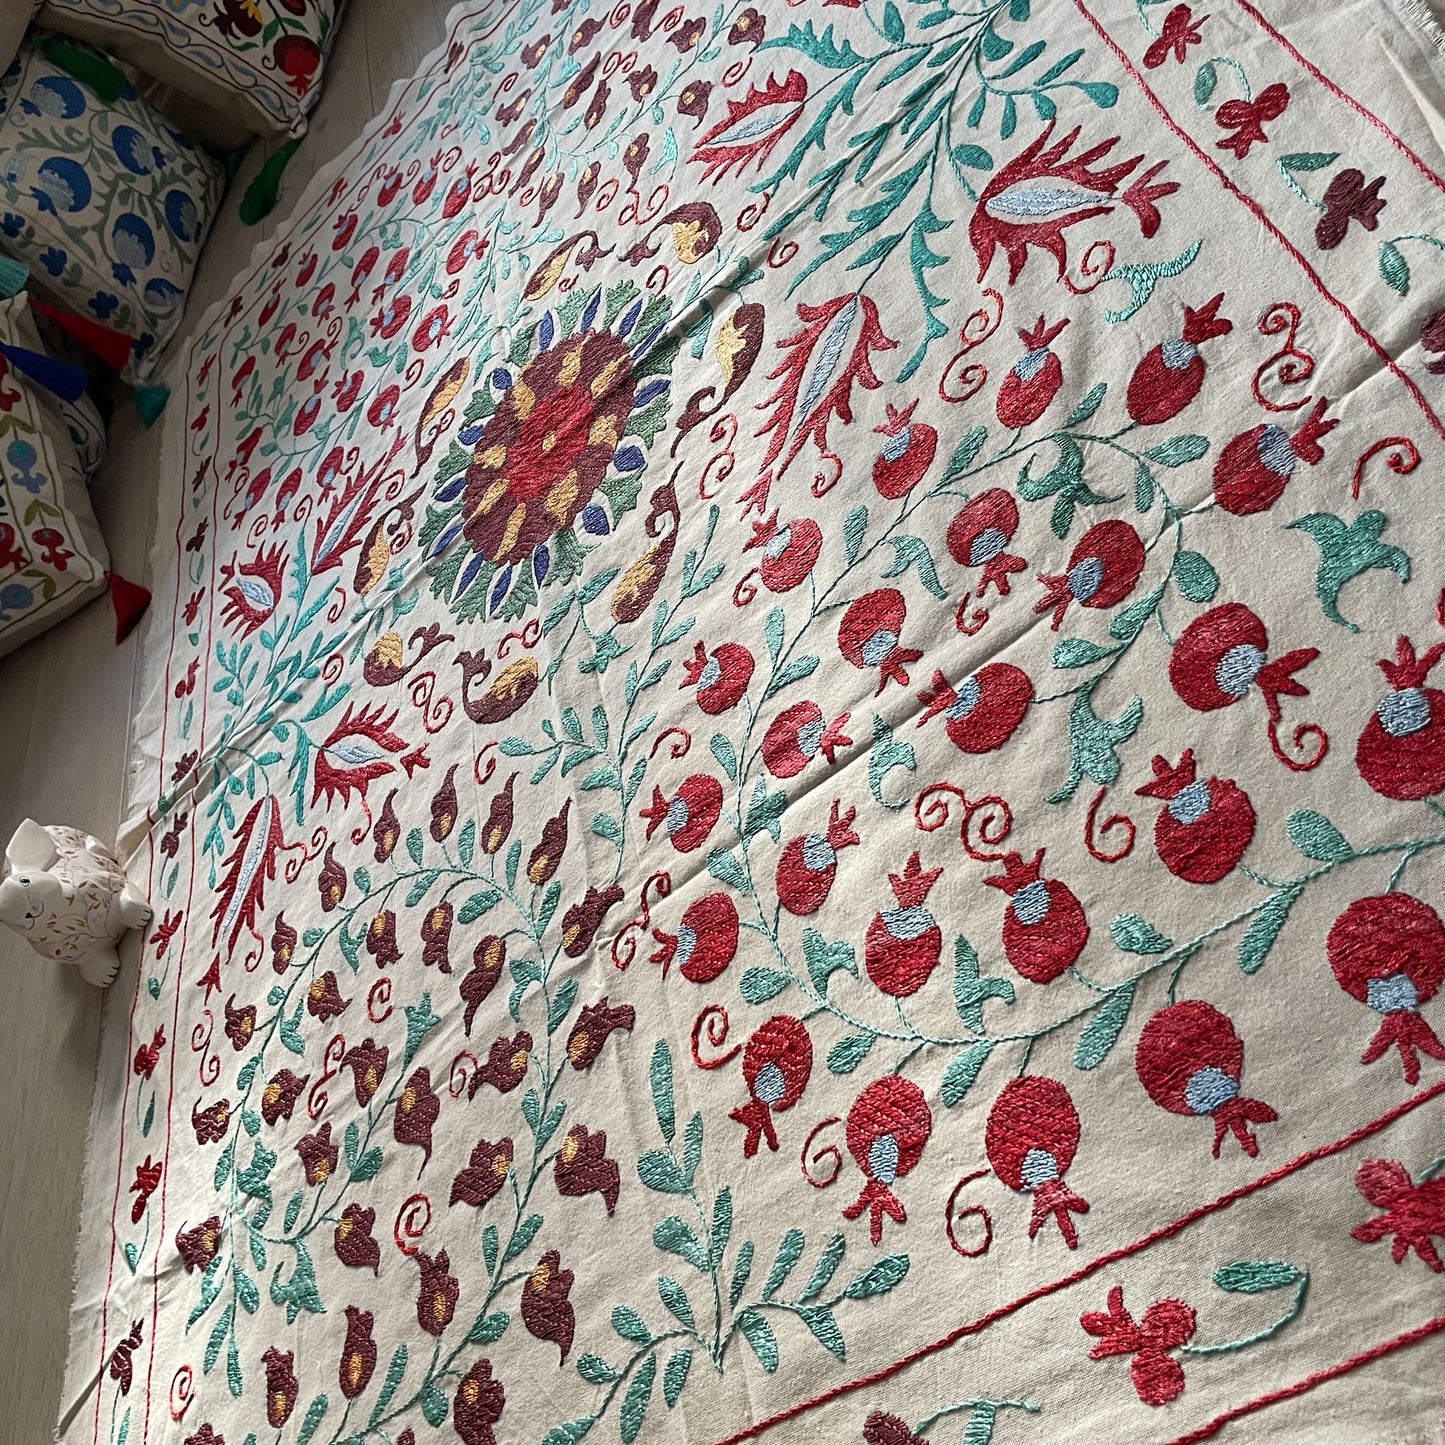 Uzbeki Suzani Hand Embroidered Textile Wall Hanging | Home Décor | Runner | 100cm x 150cm SUZ0410007 - Wildash London